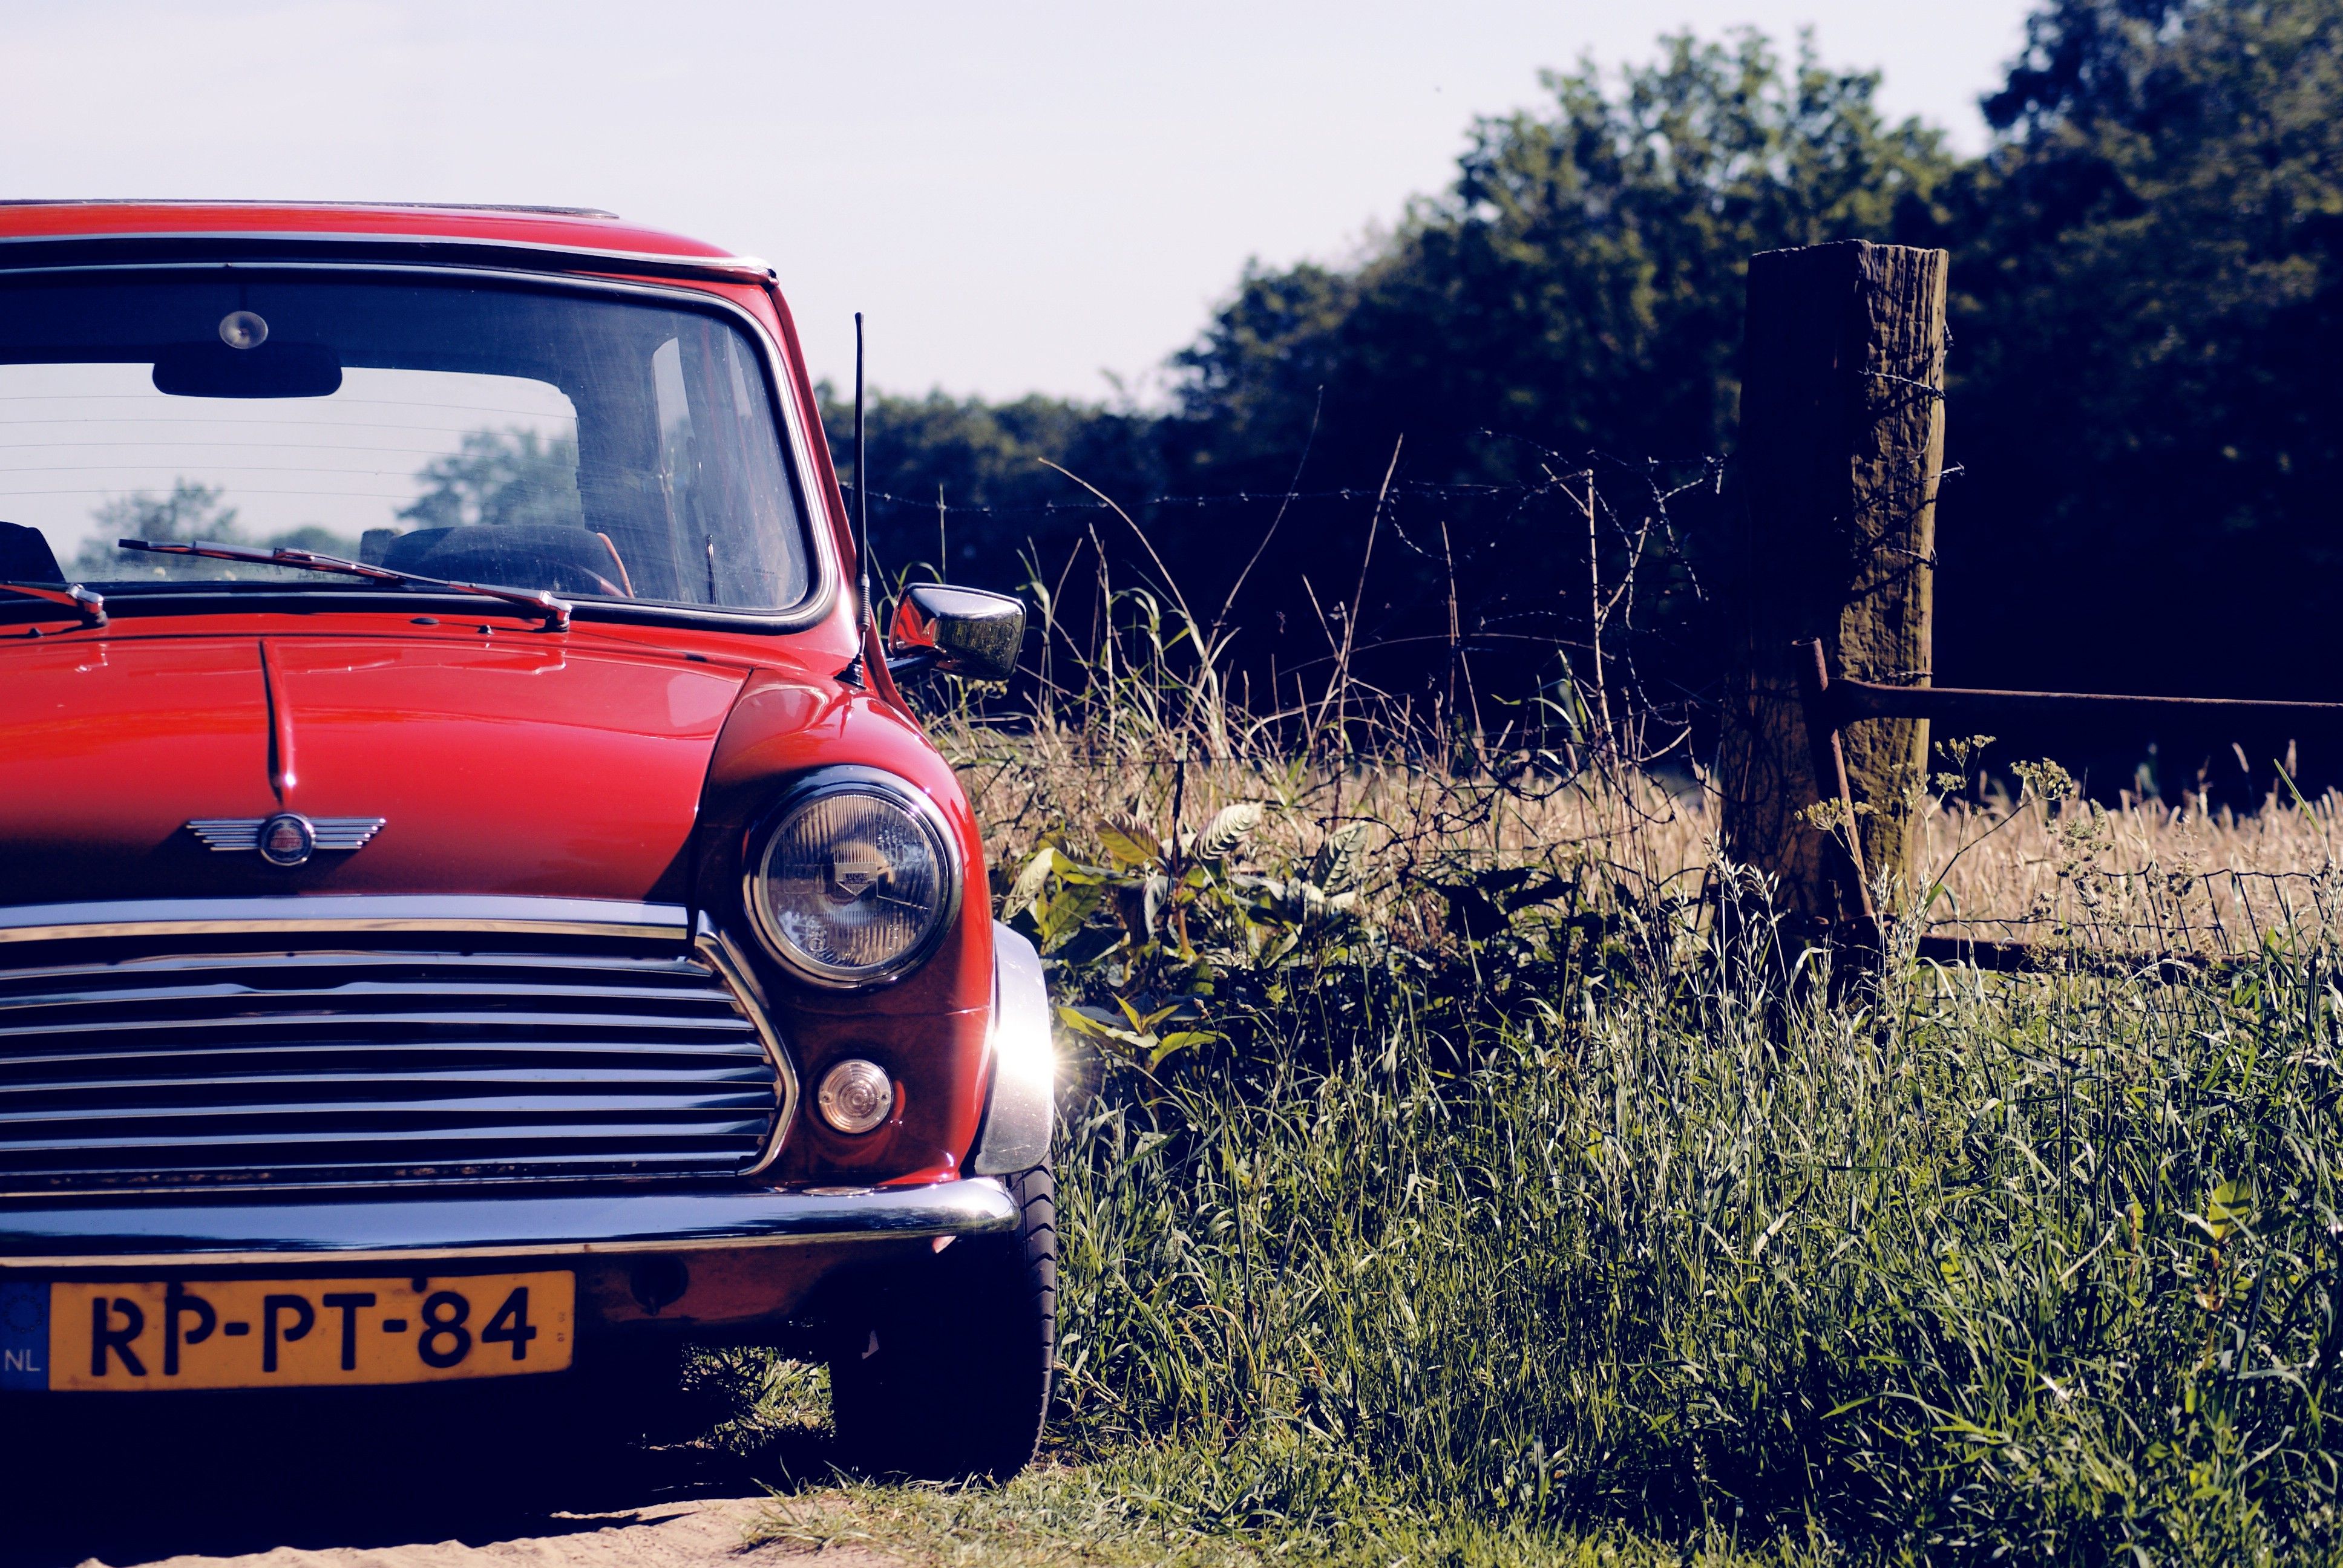 A beautiful Old classic red Mini Cooper in the country. Mini cooper wallpaper, Mini cooper, HD wallpaper